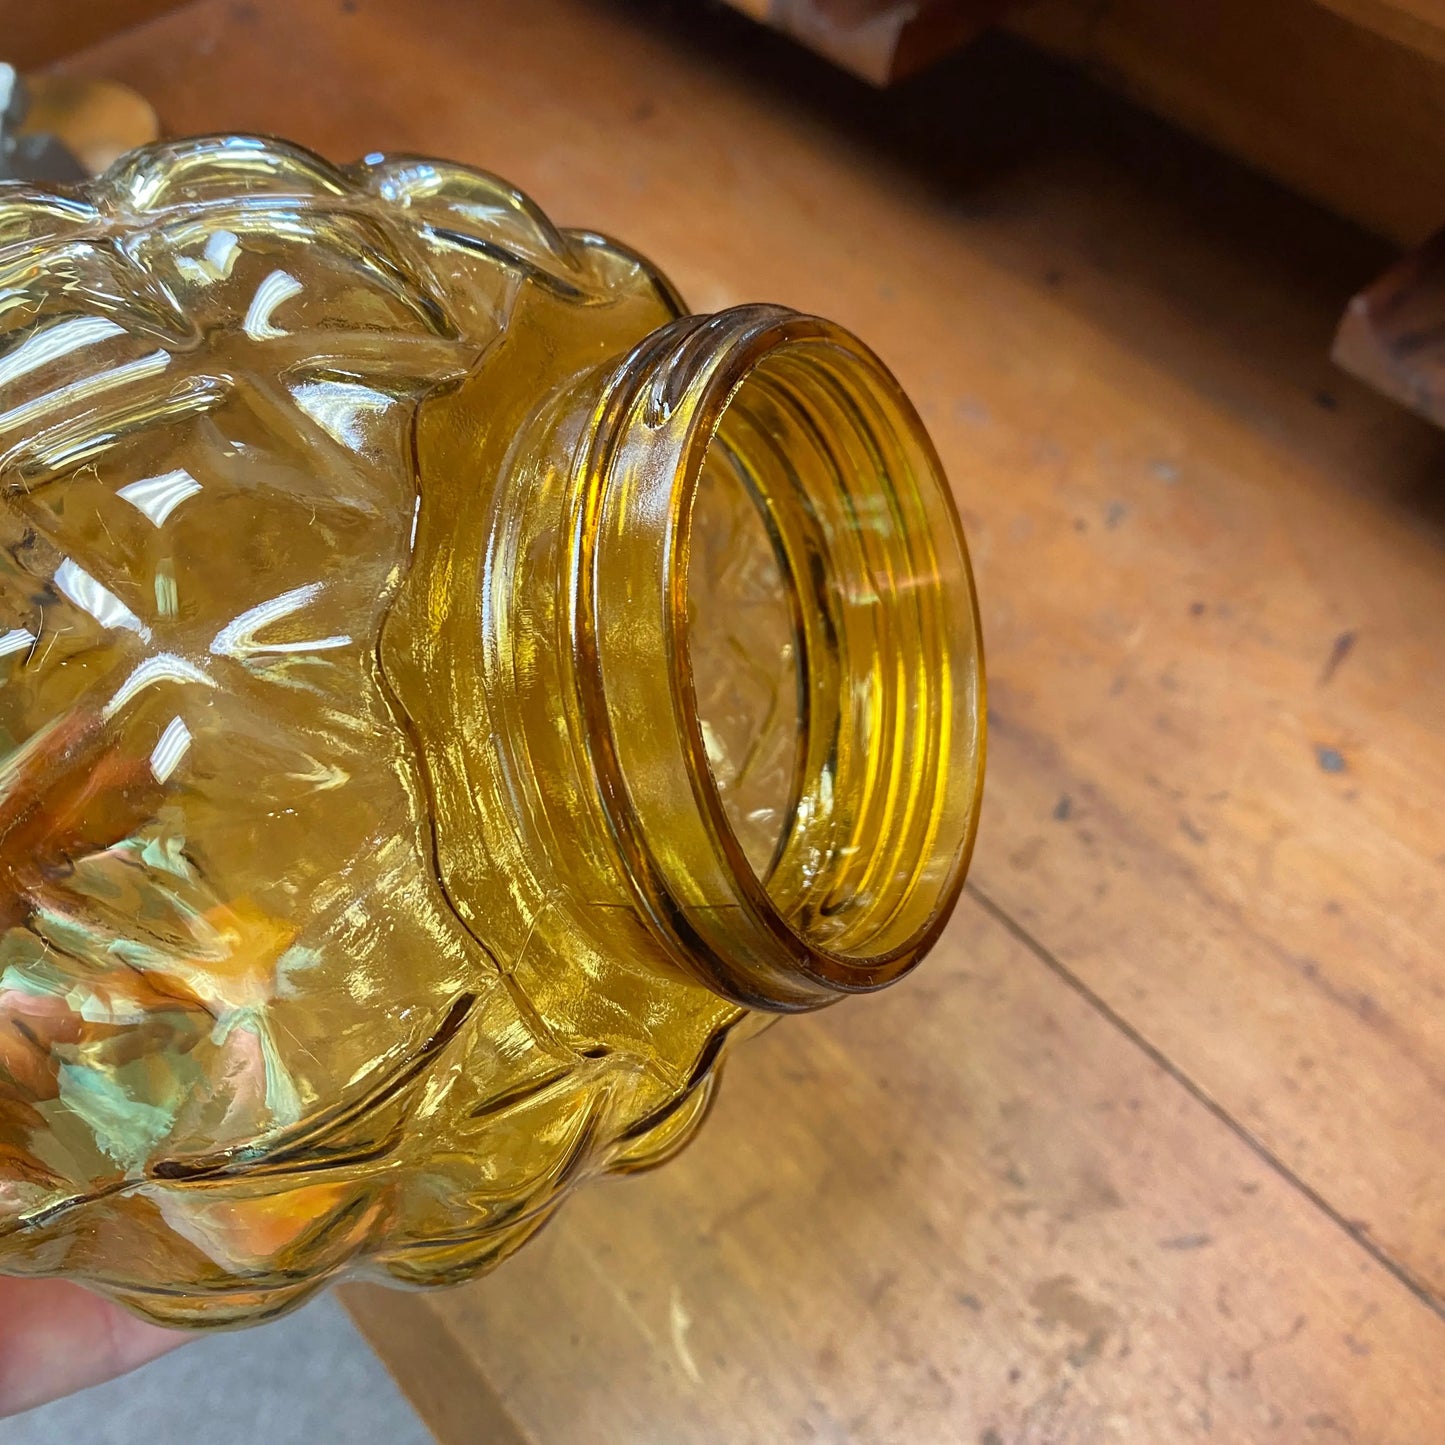 Vintage Pineapple Amber Glass Light Shade